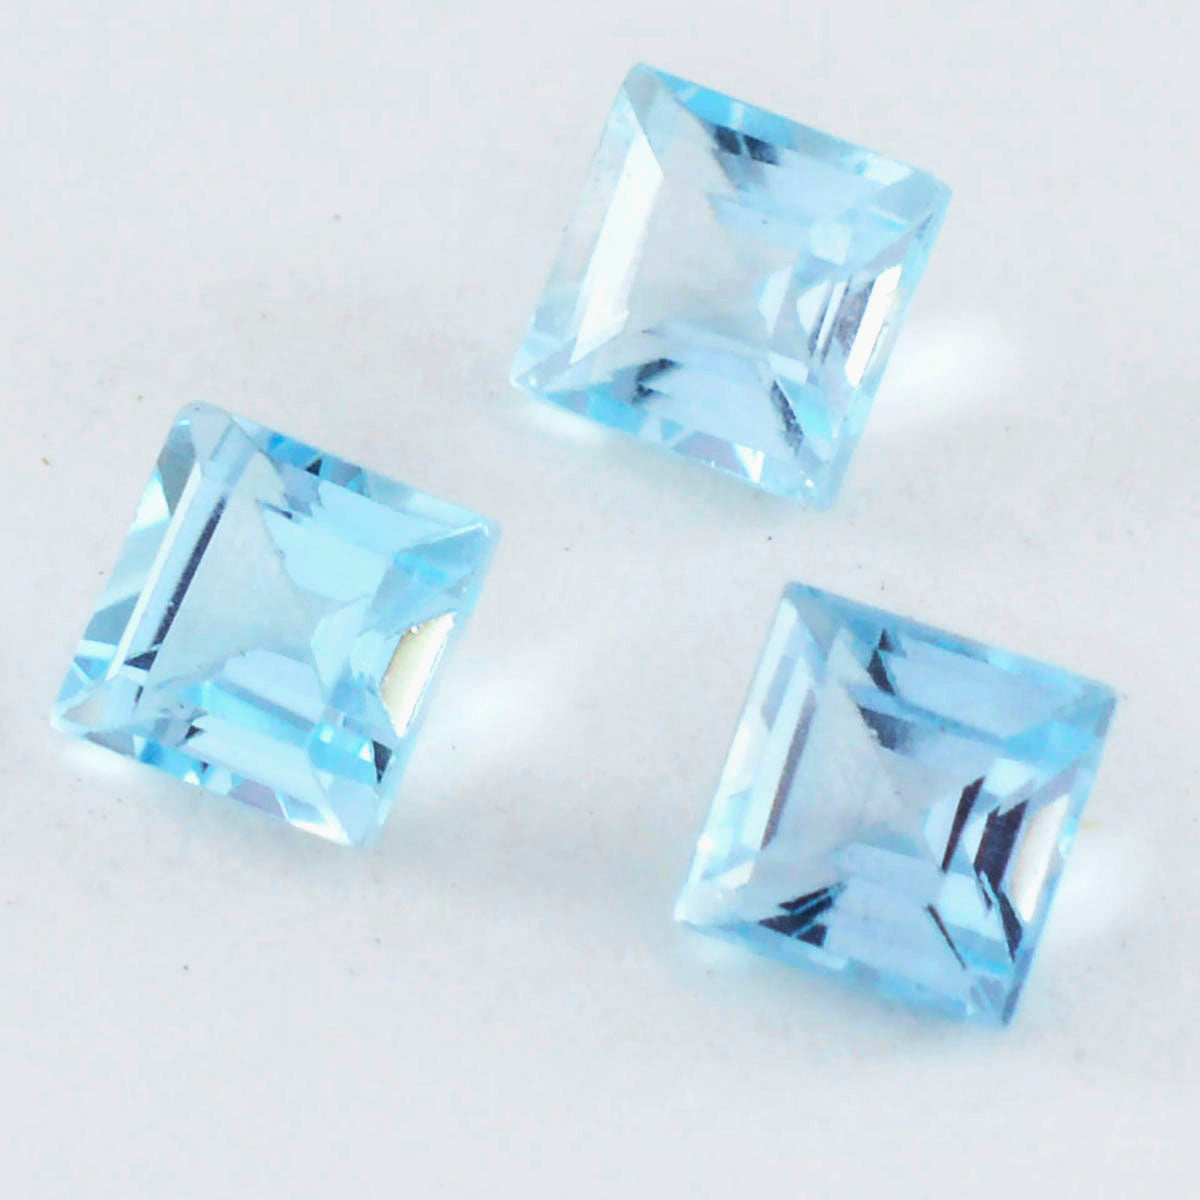 riyogems 1 pezzo di vero topazio blu sfaccettato 13x13 mm di forma quadrata, gemme di eccellente qualità